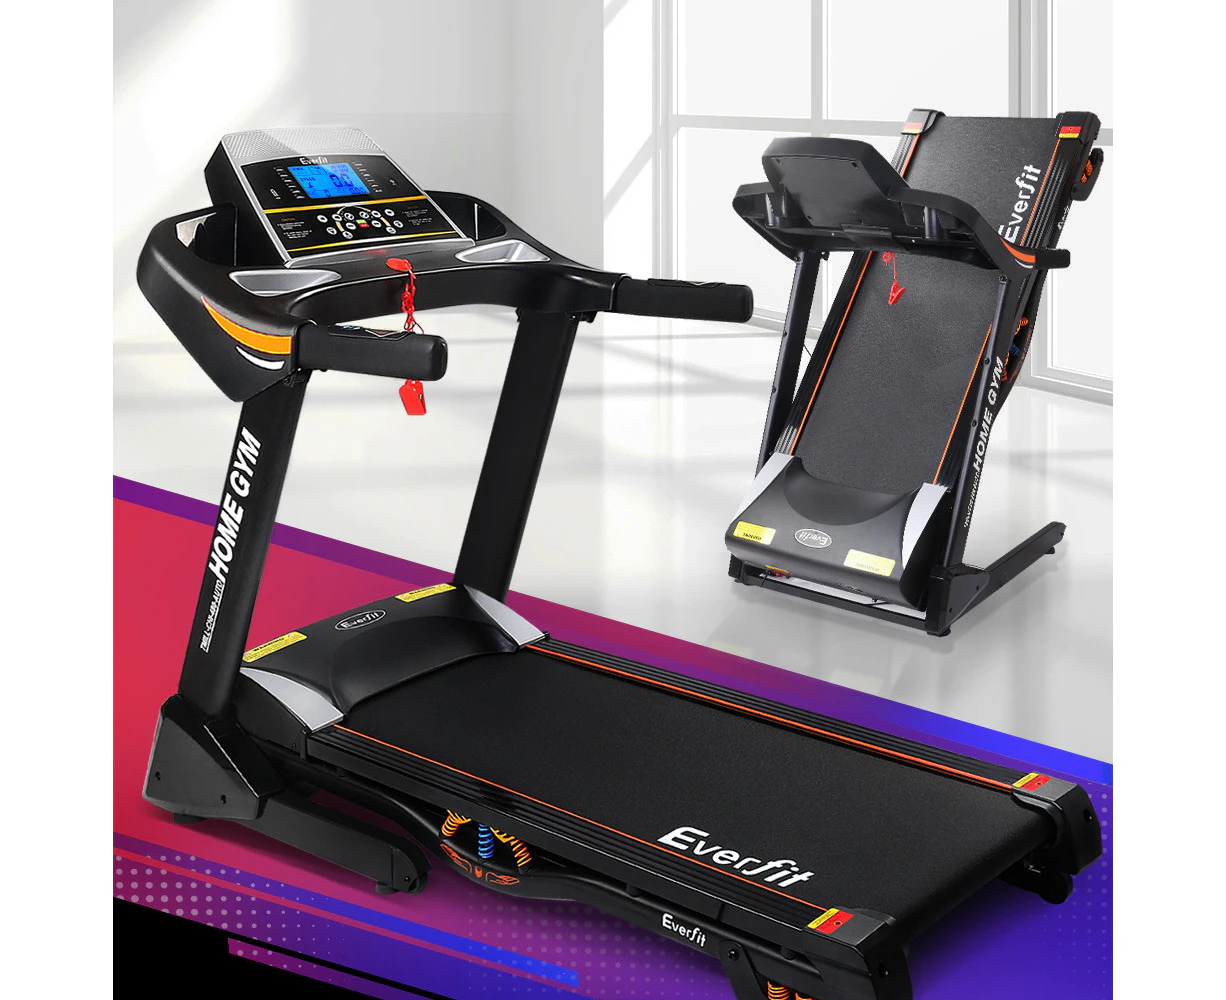 Shop Treadmills Online!